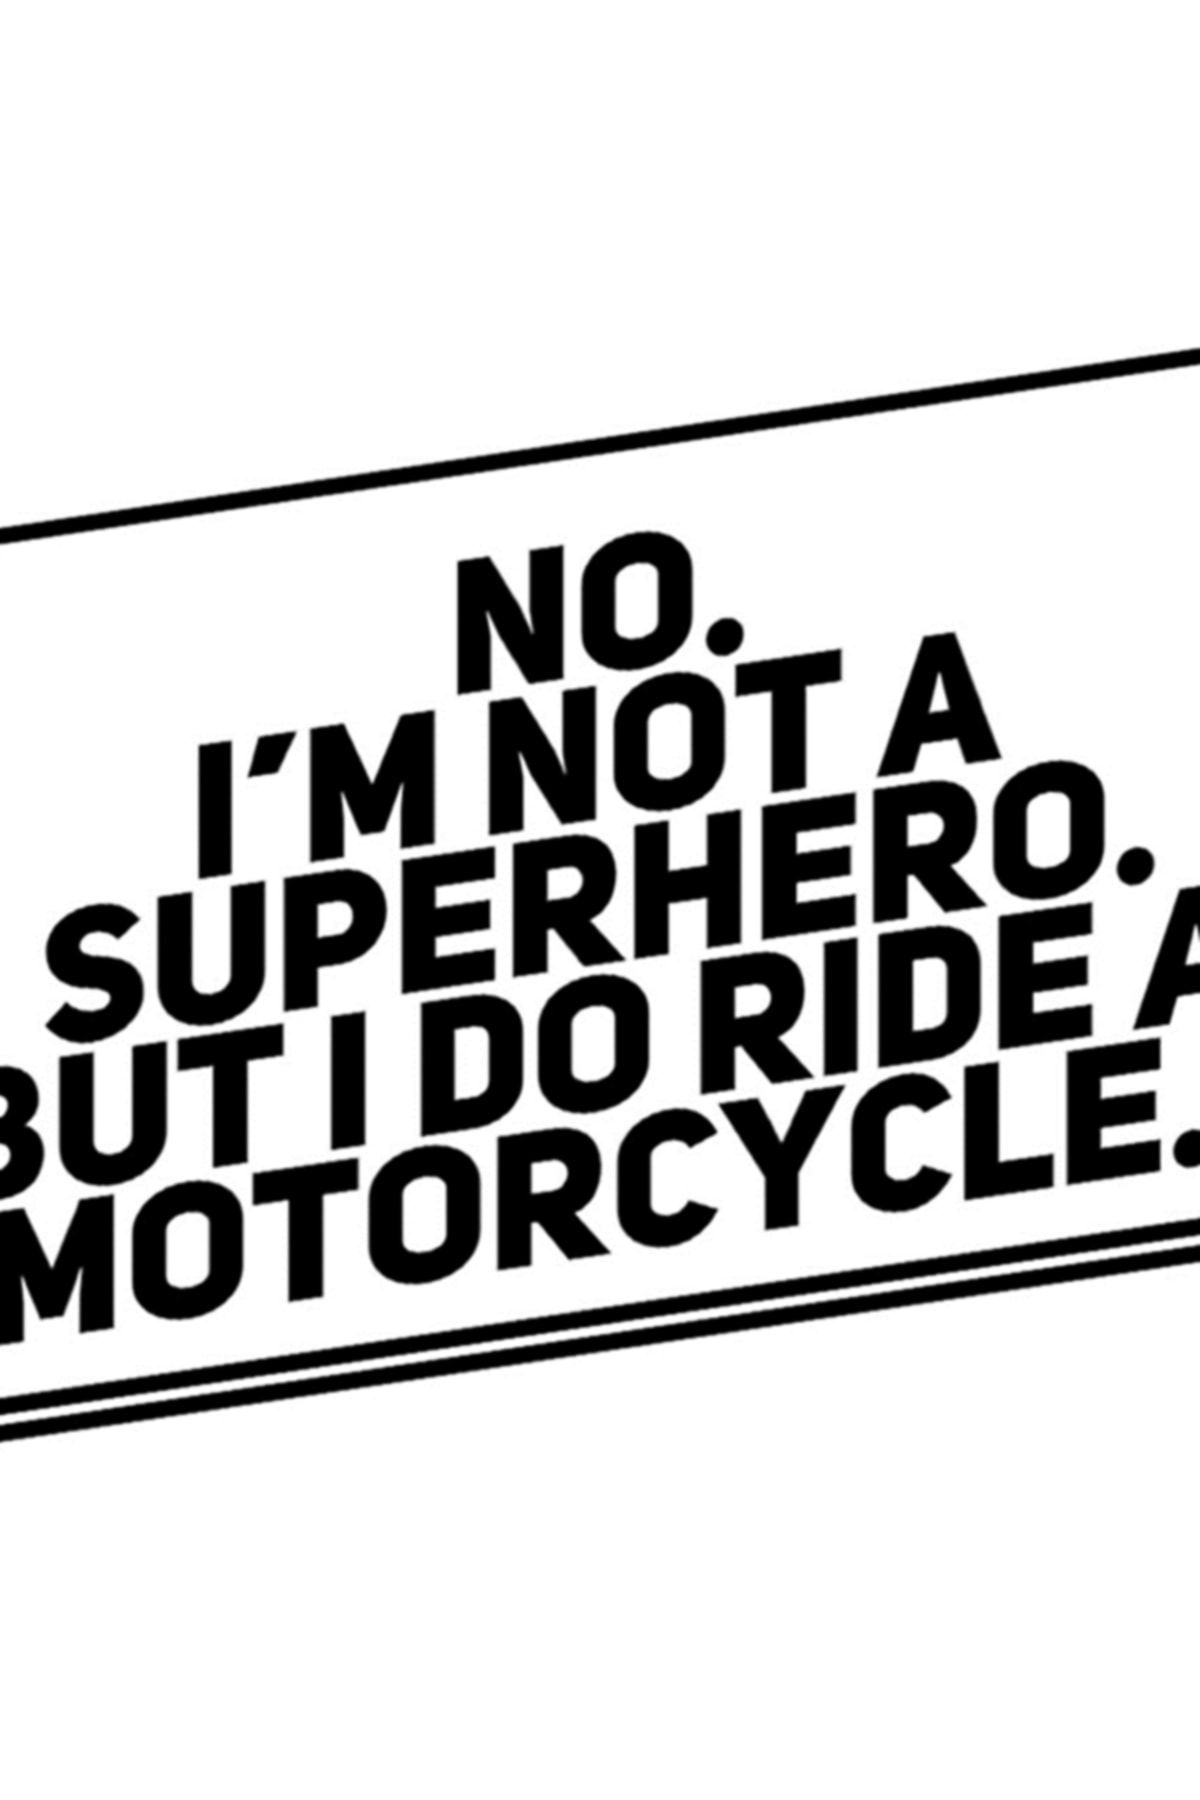 Universal Hayır Ben Süper Kahraman Değilim Ama Motosiklete Binerim Siyah Metin Ahşap Poster Dekoratif